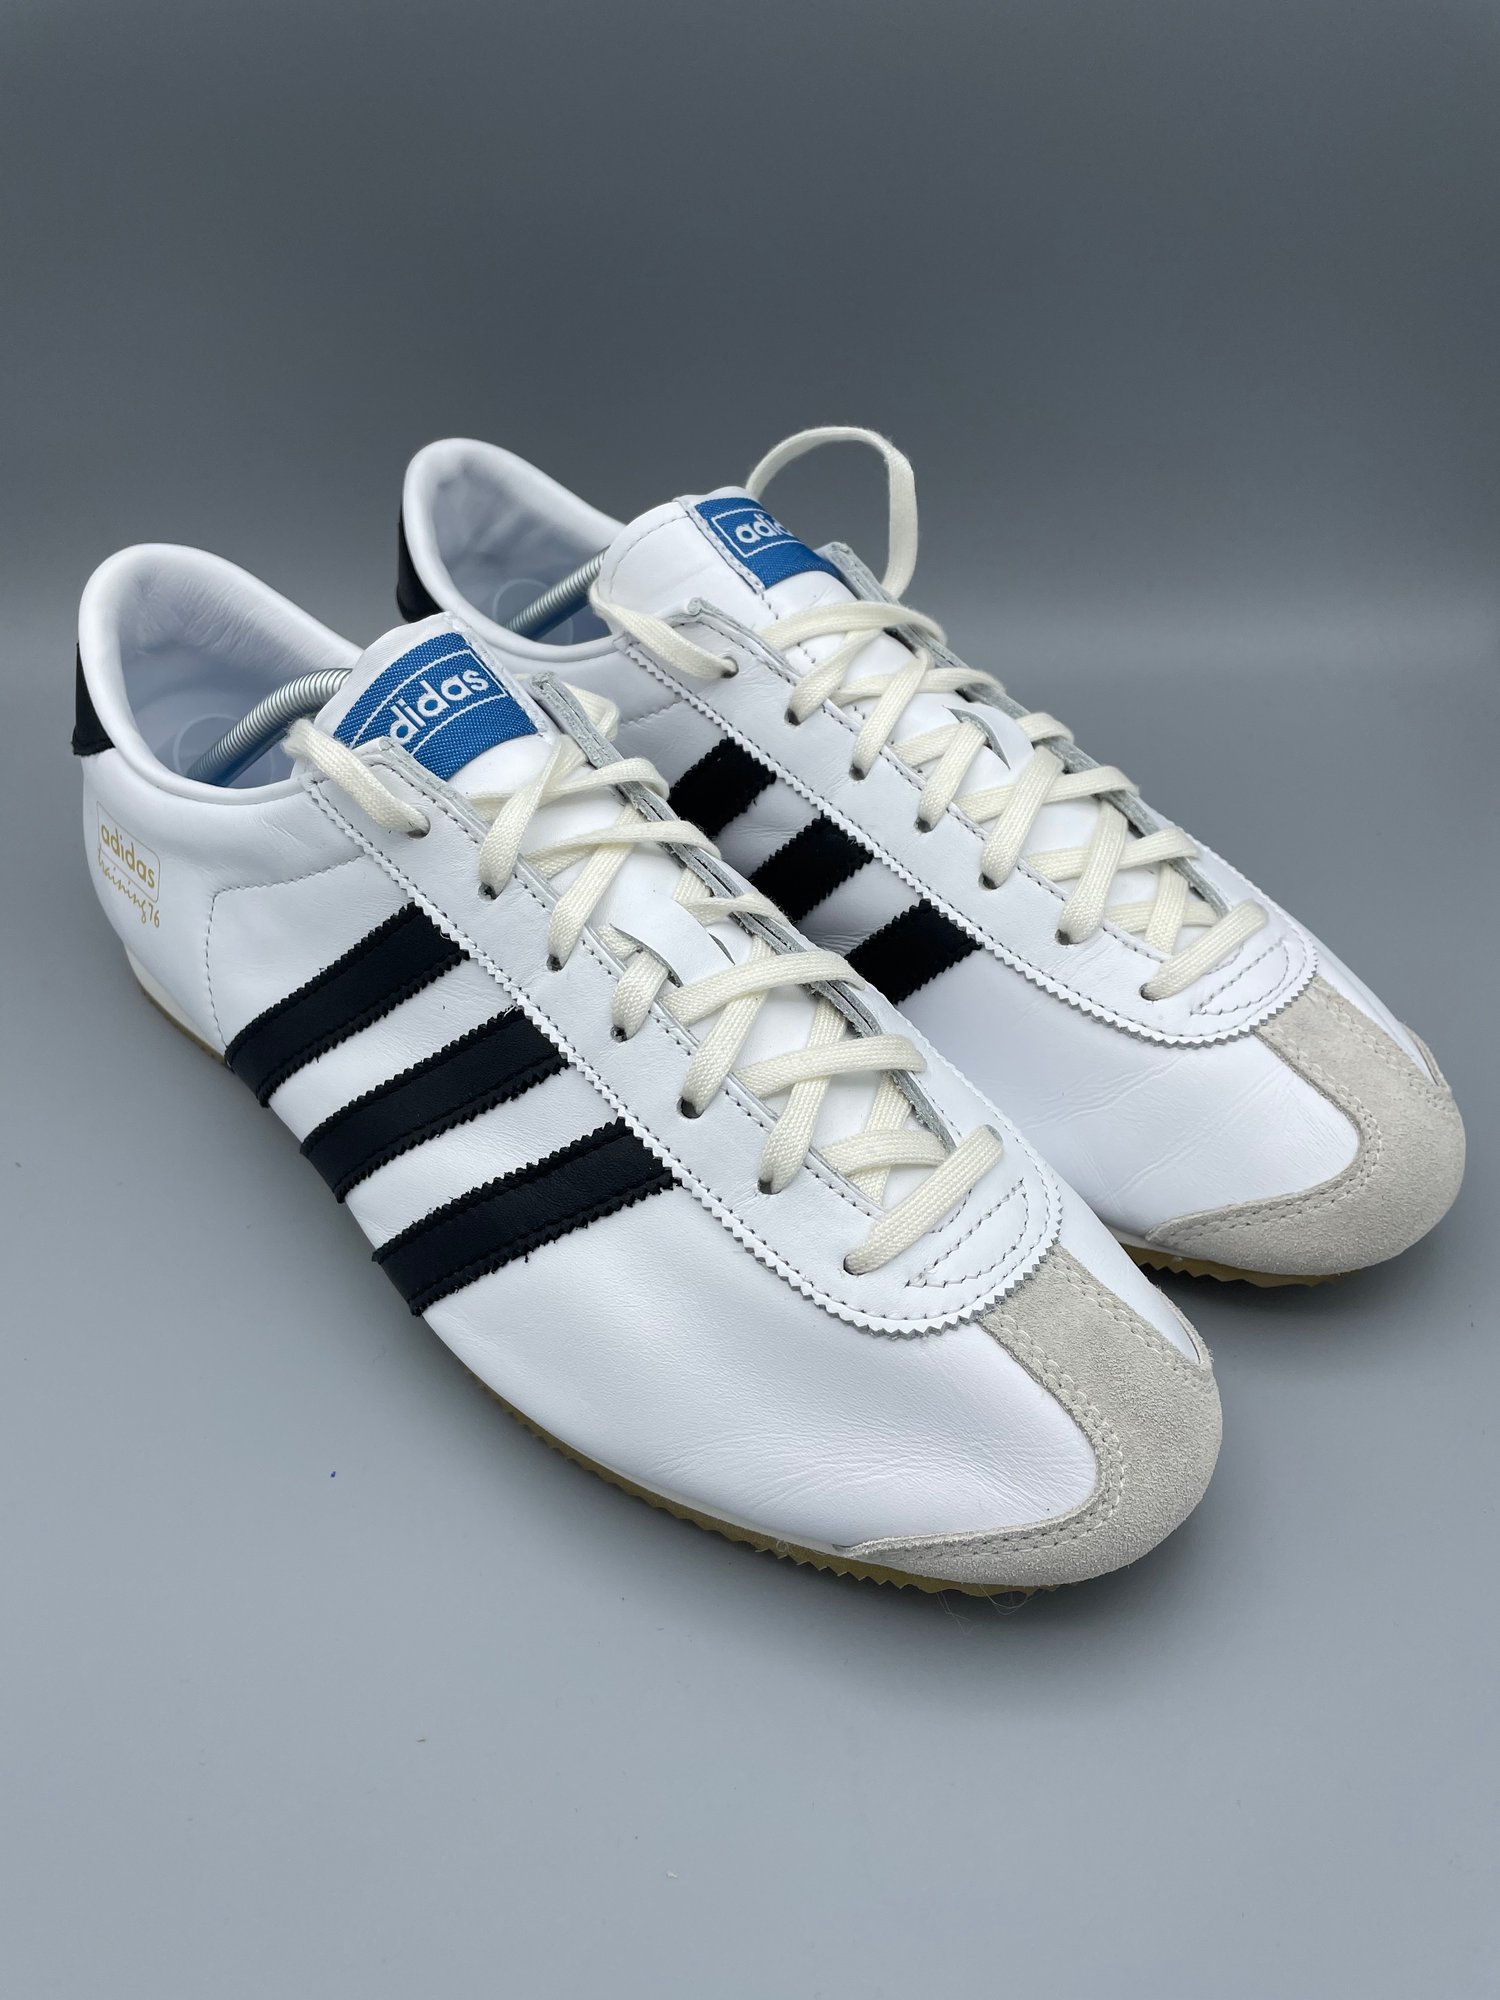 Adidas Training 76 Spzl - UK9.5 | OriginalSoles